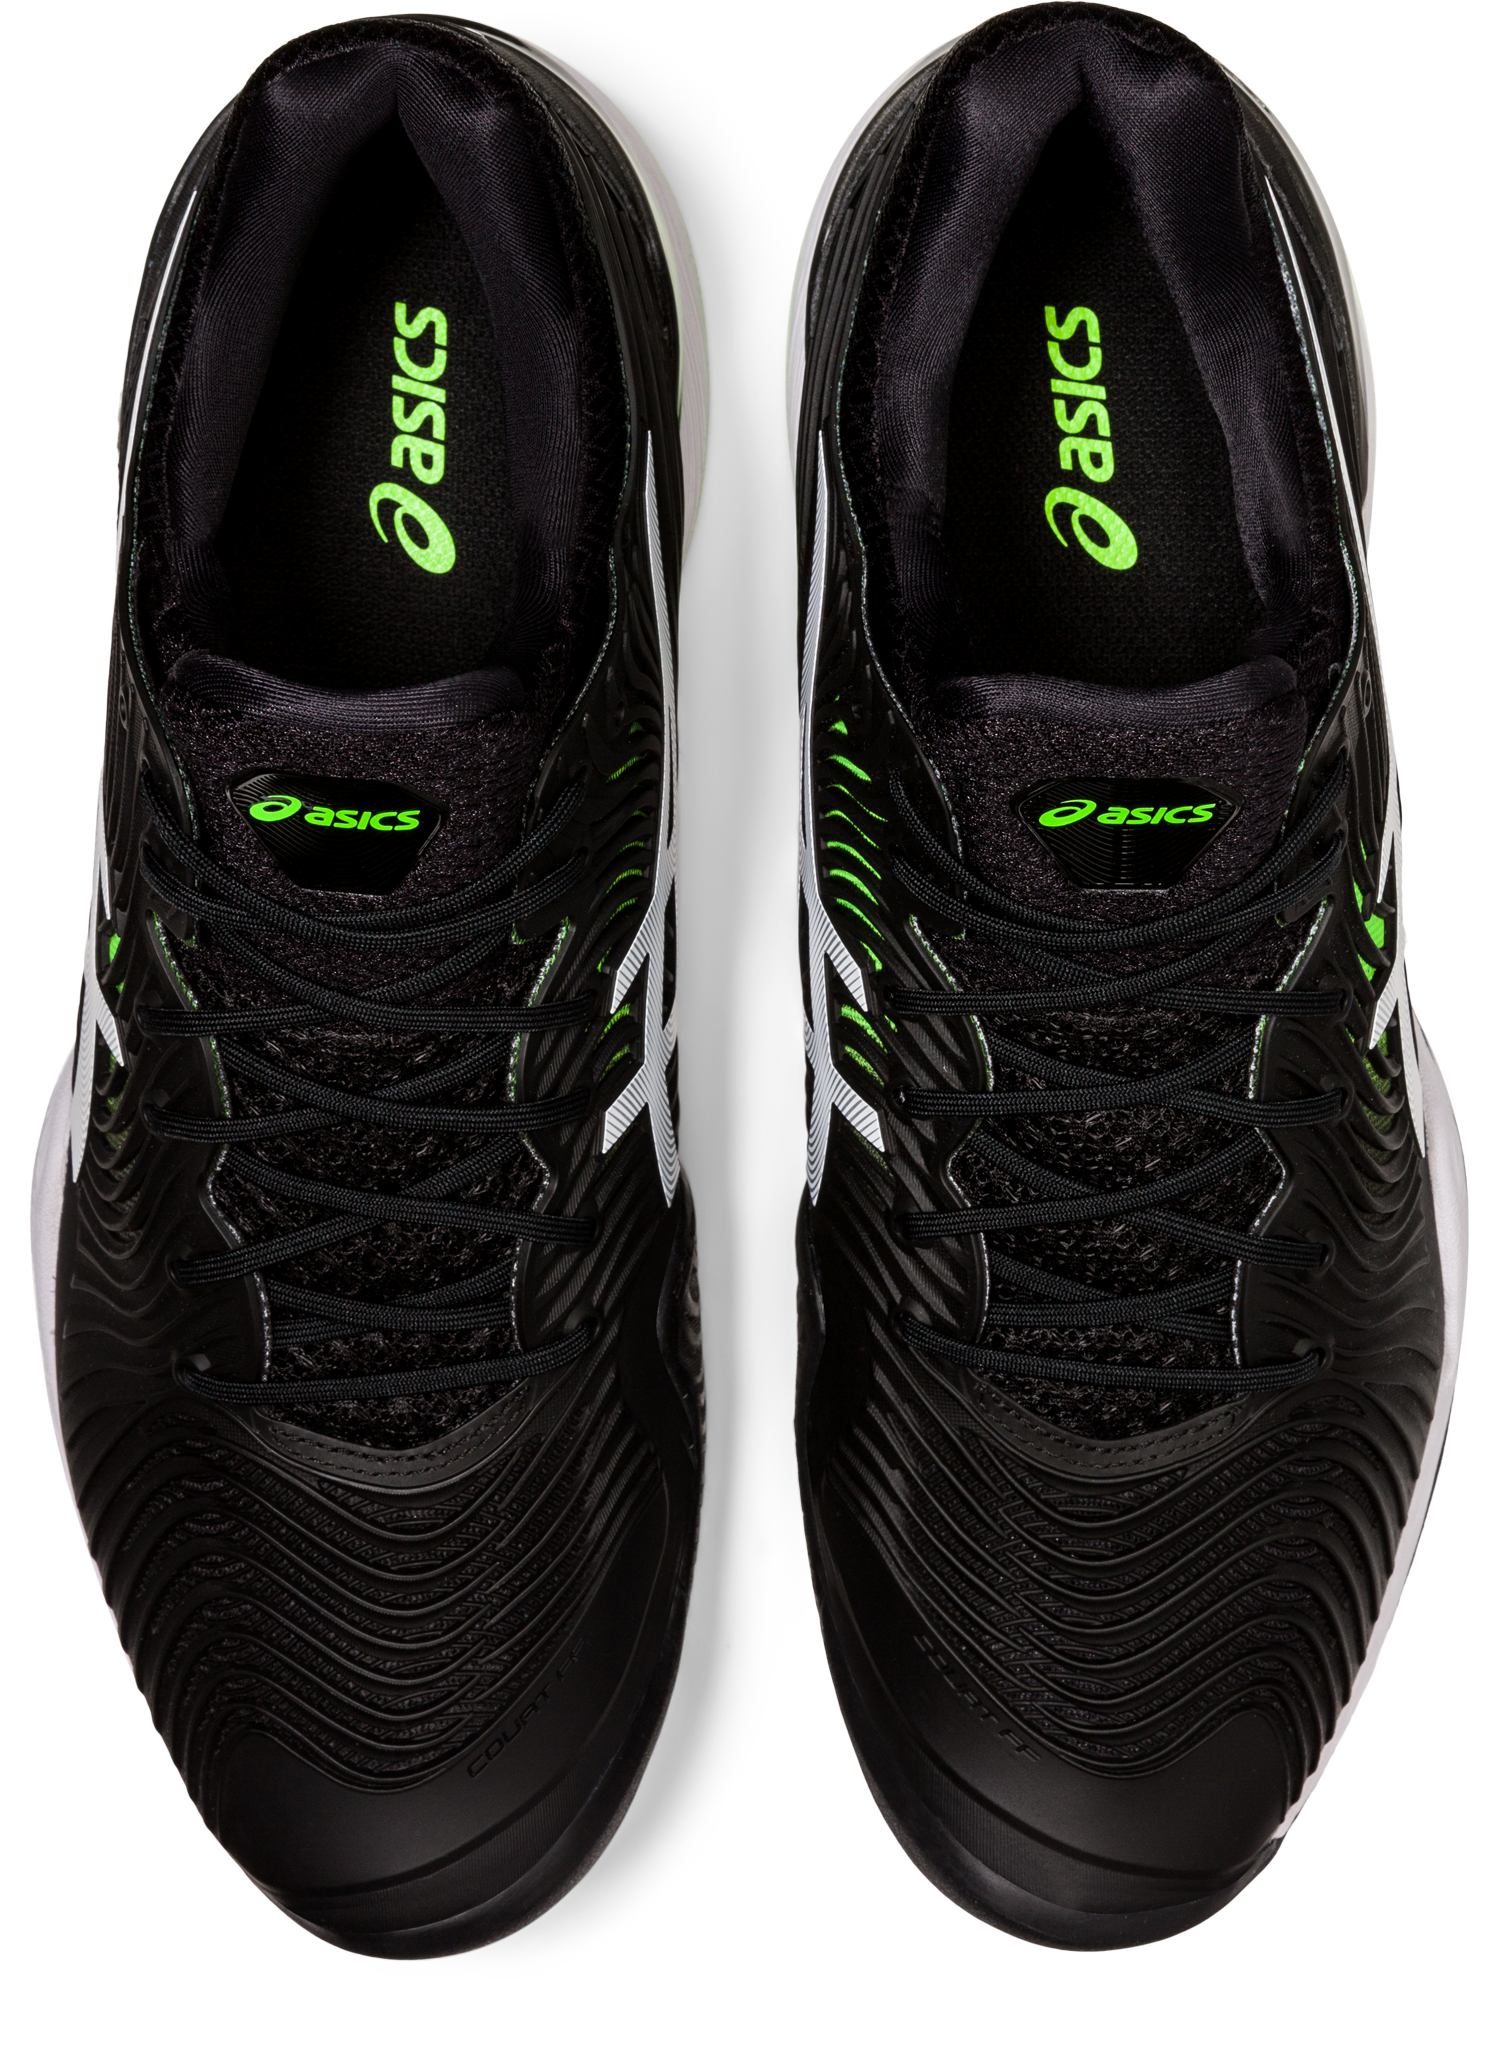 Asics Men's COURT FF 2 Tennis Shoes in Black/Green Gecko